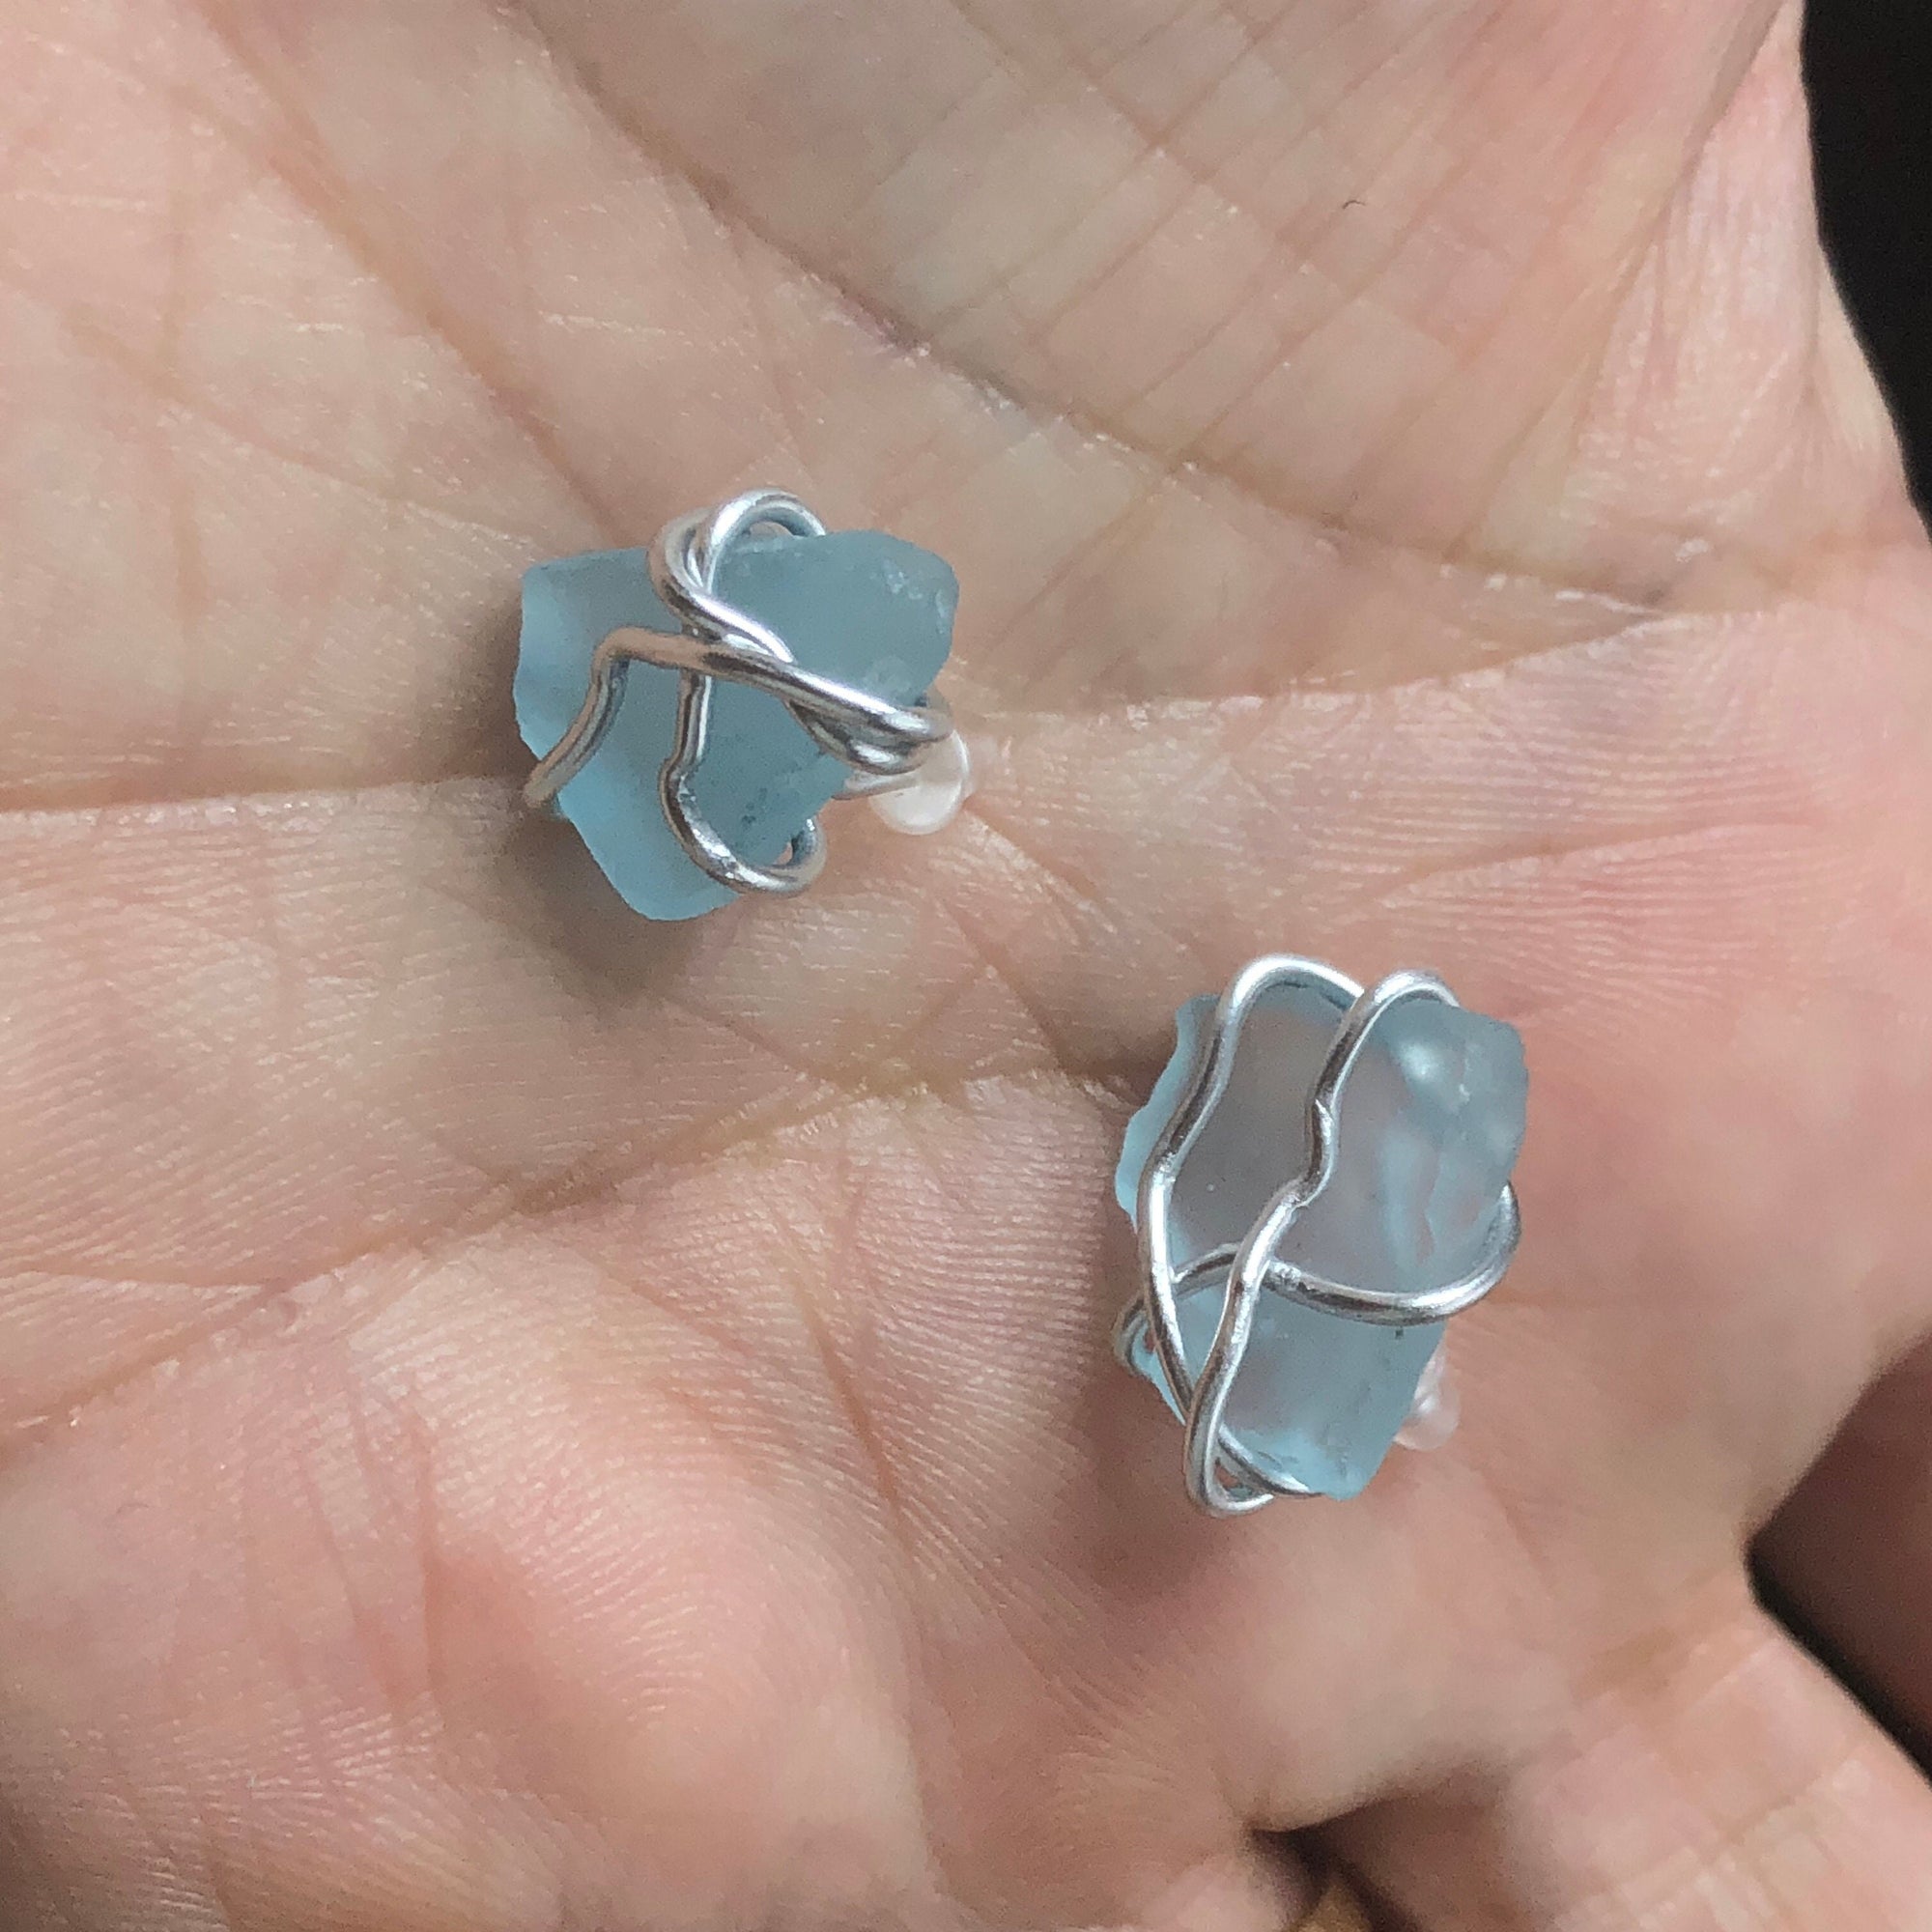 Aquamarine stud earrings sea glass - hand wire wrapped